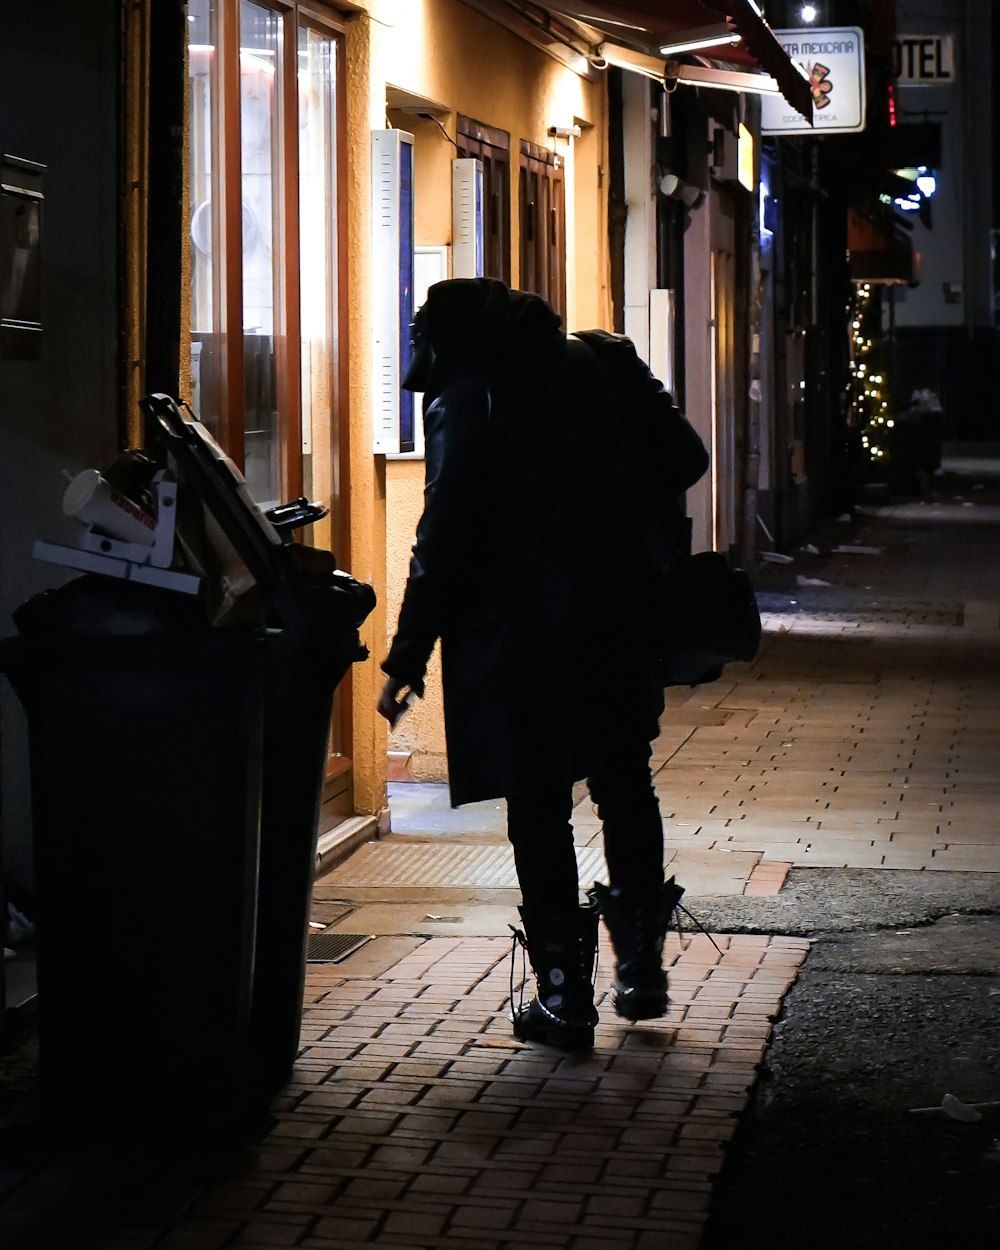 woman in black coat standing on sidewalk during daytime